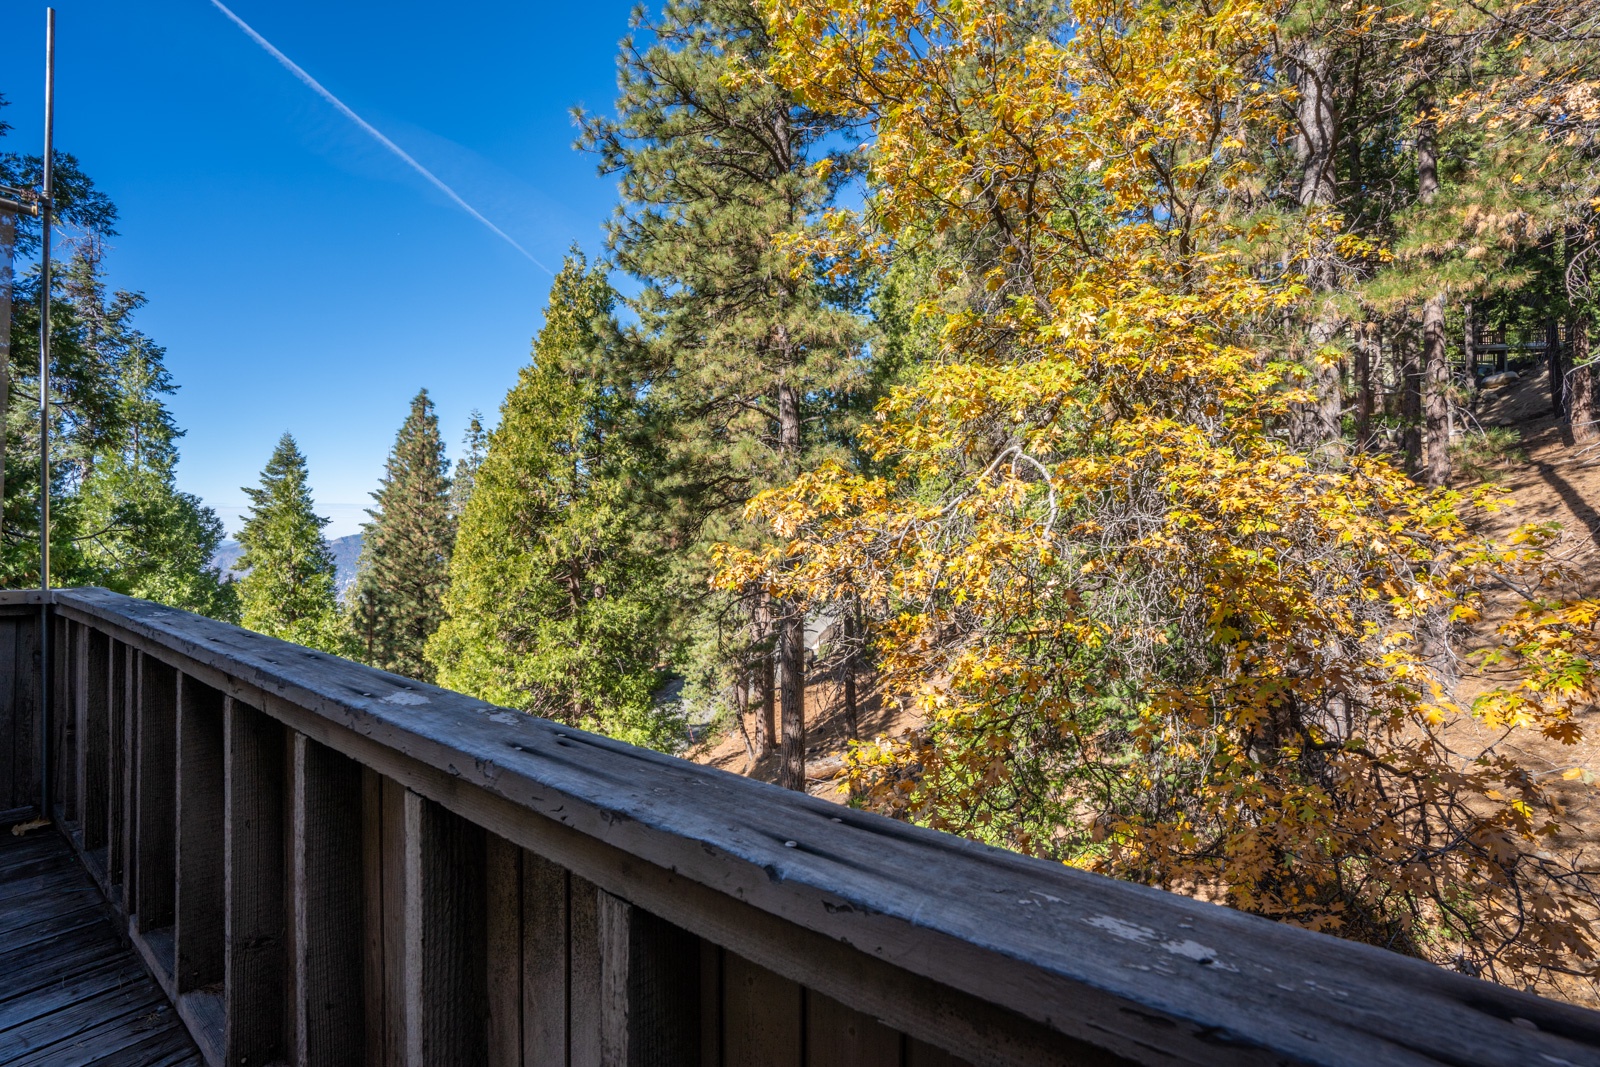 Step onto the spacious deck and enjoy treehouse-like views